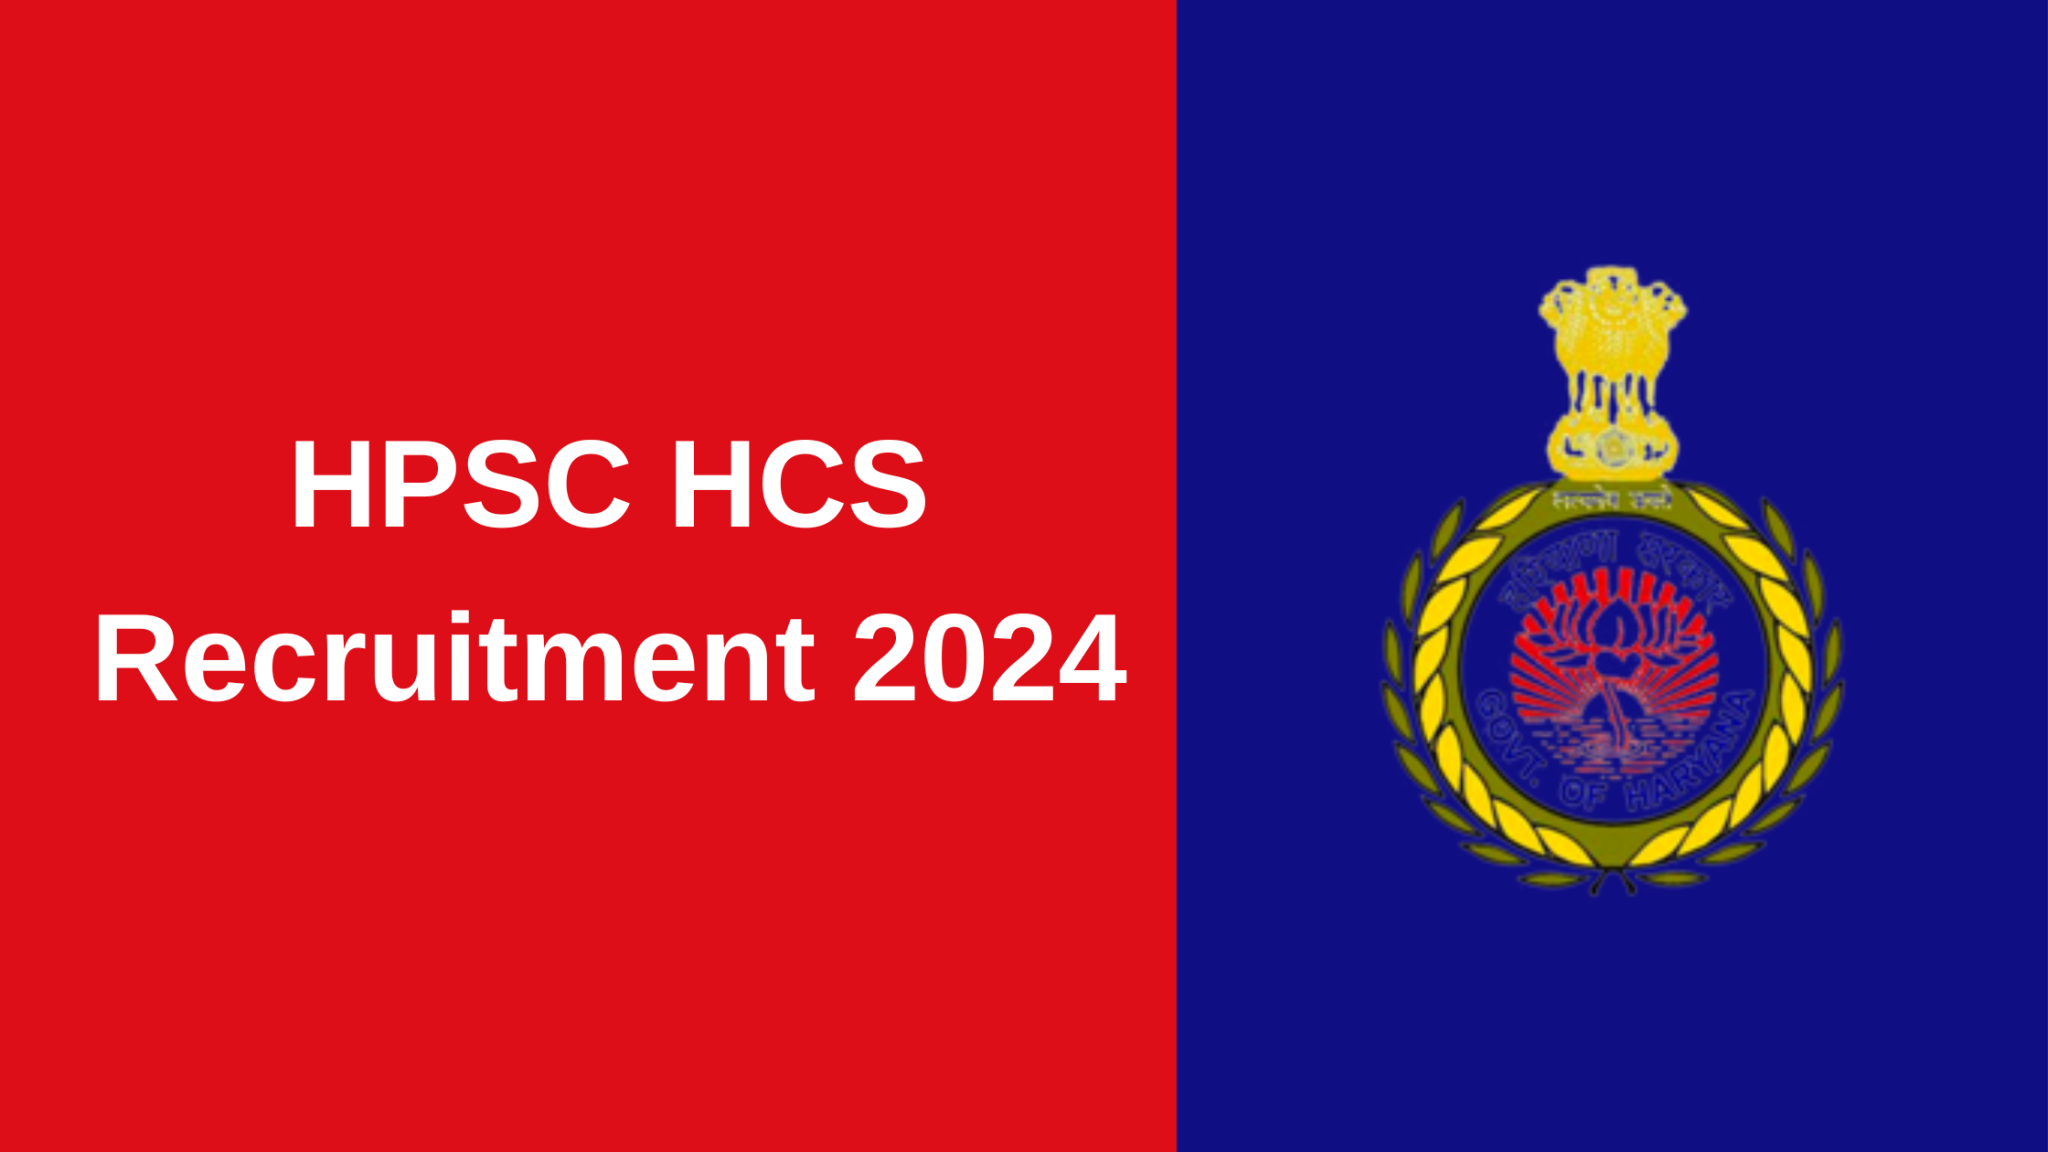 HPSC HCS Recruitment 2024, Notification, Last Date For Online Application